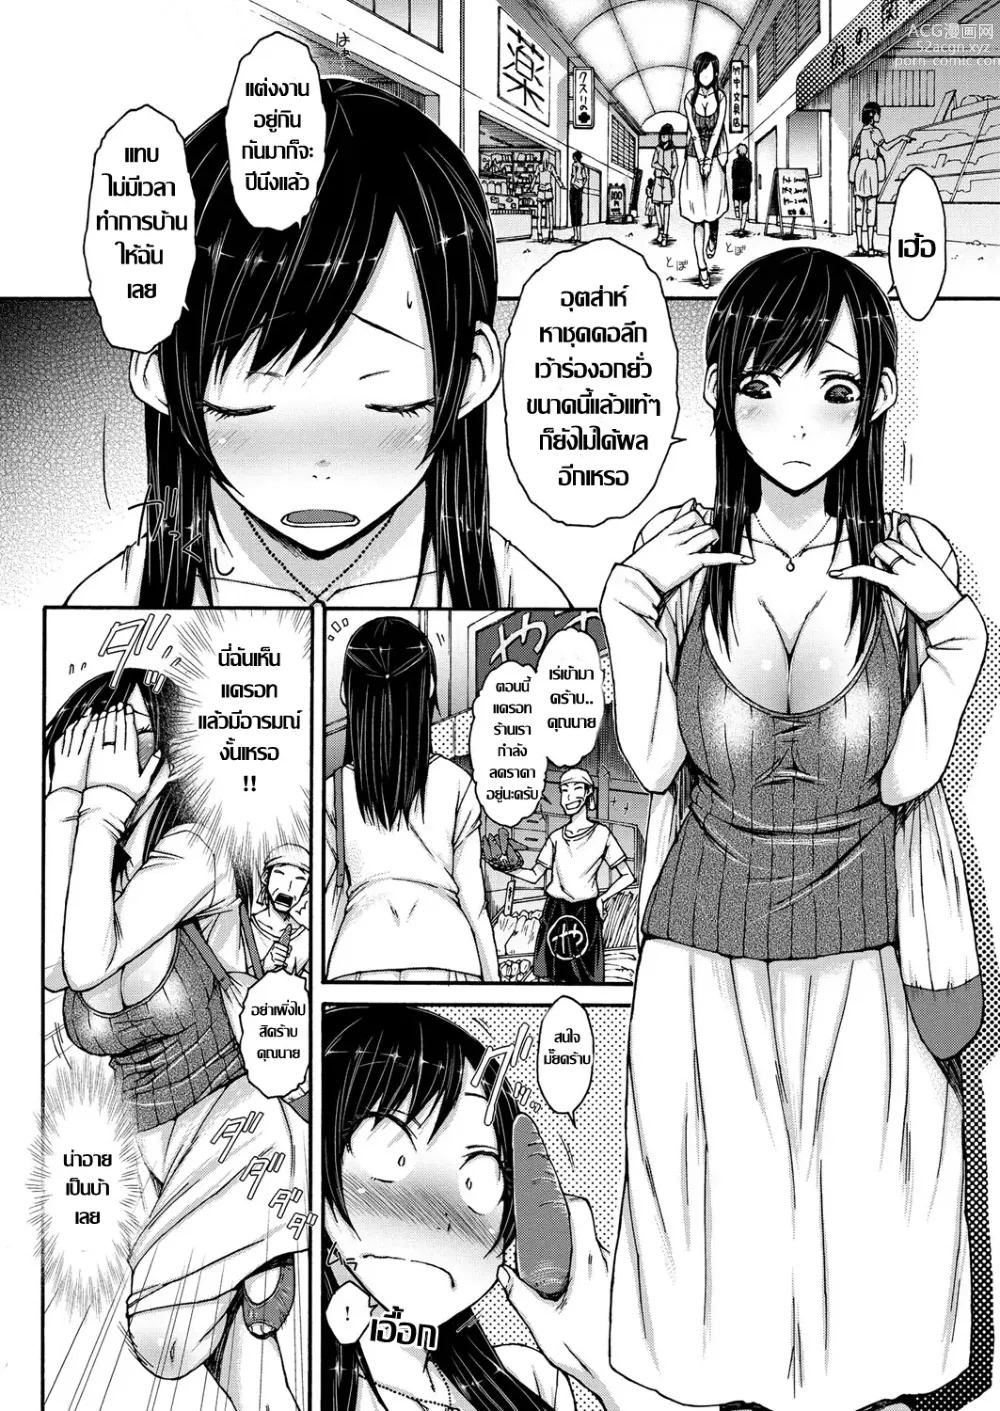 Page 2 of manga โรงหนังพาเพลิน